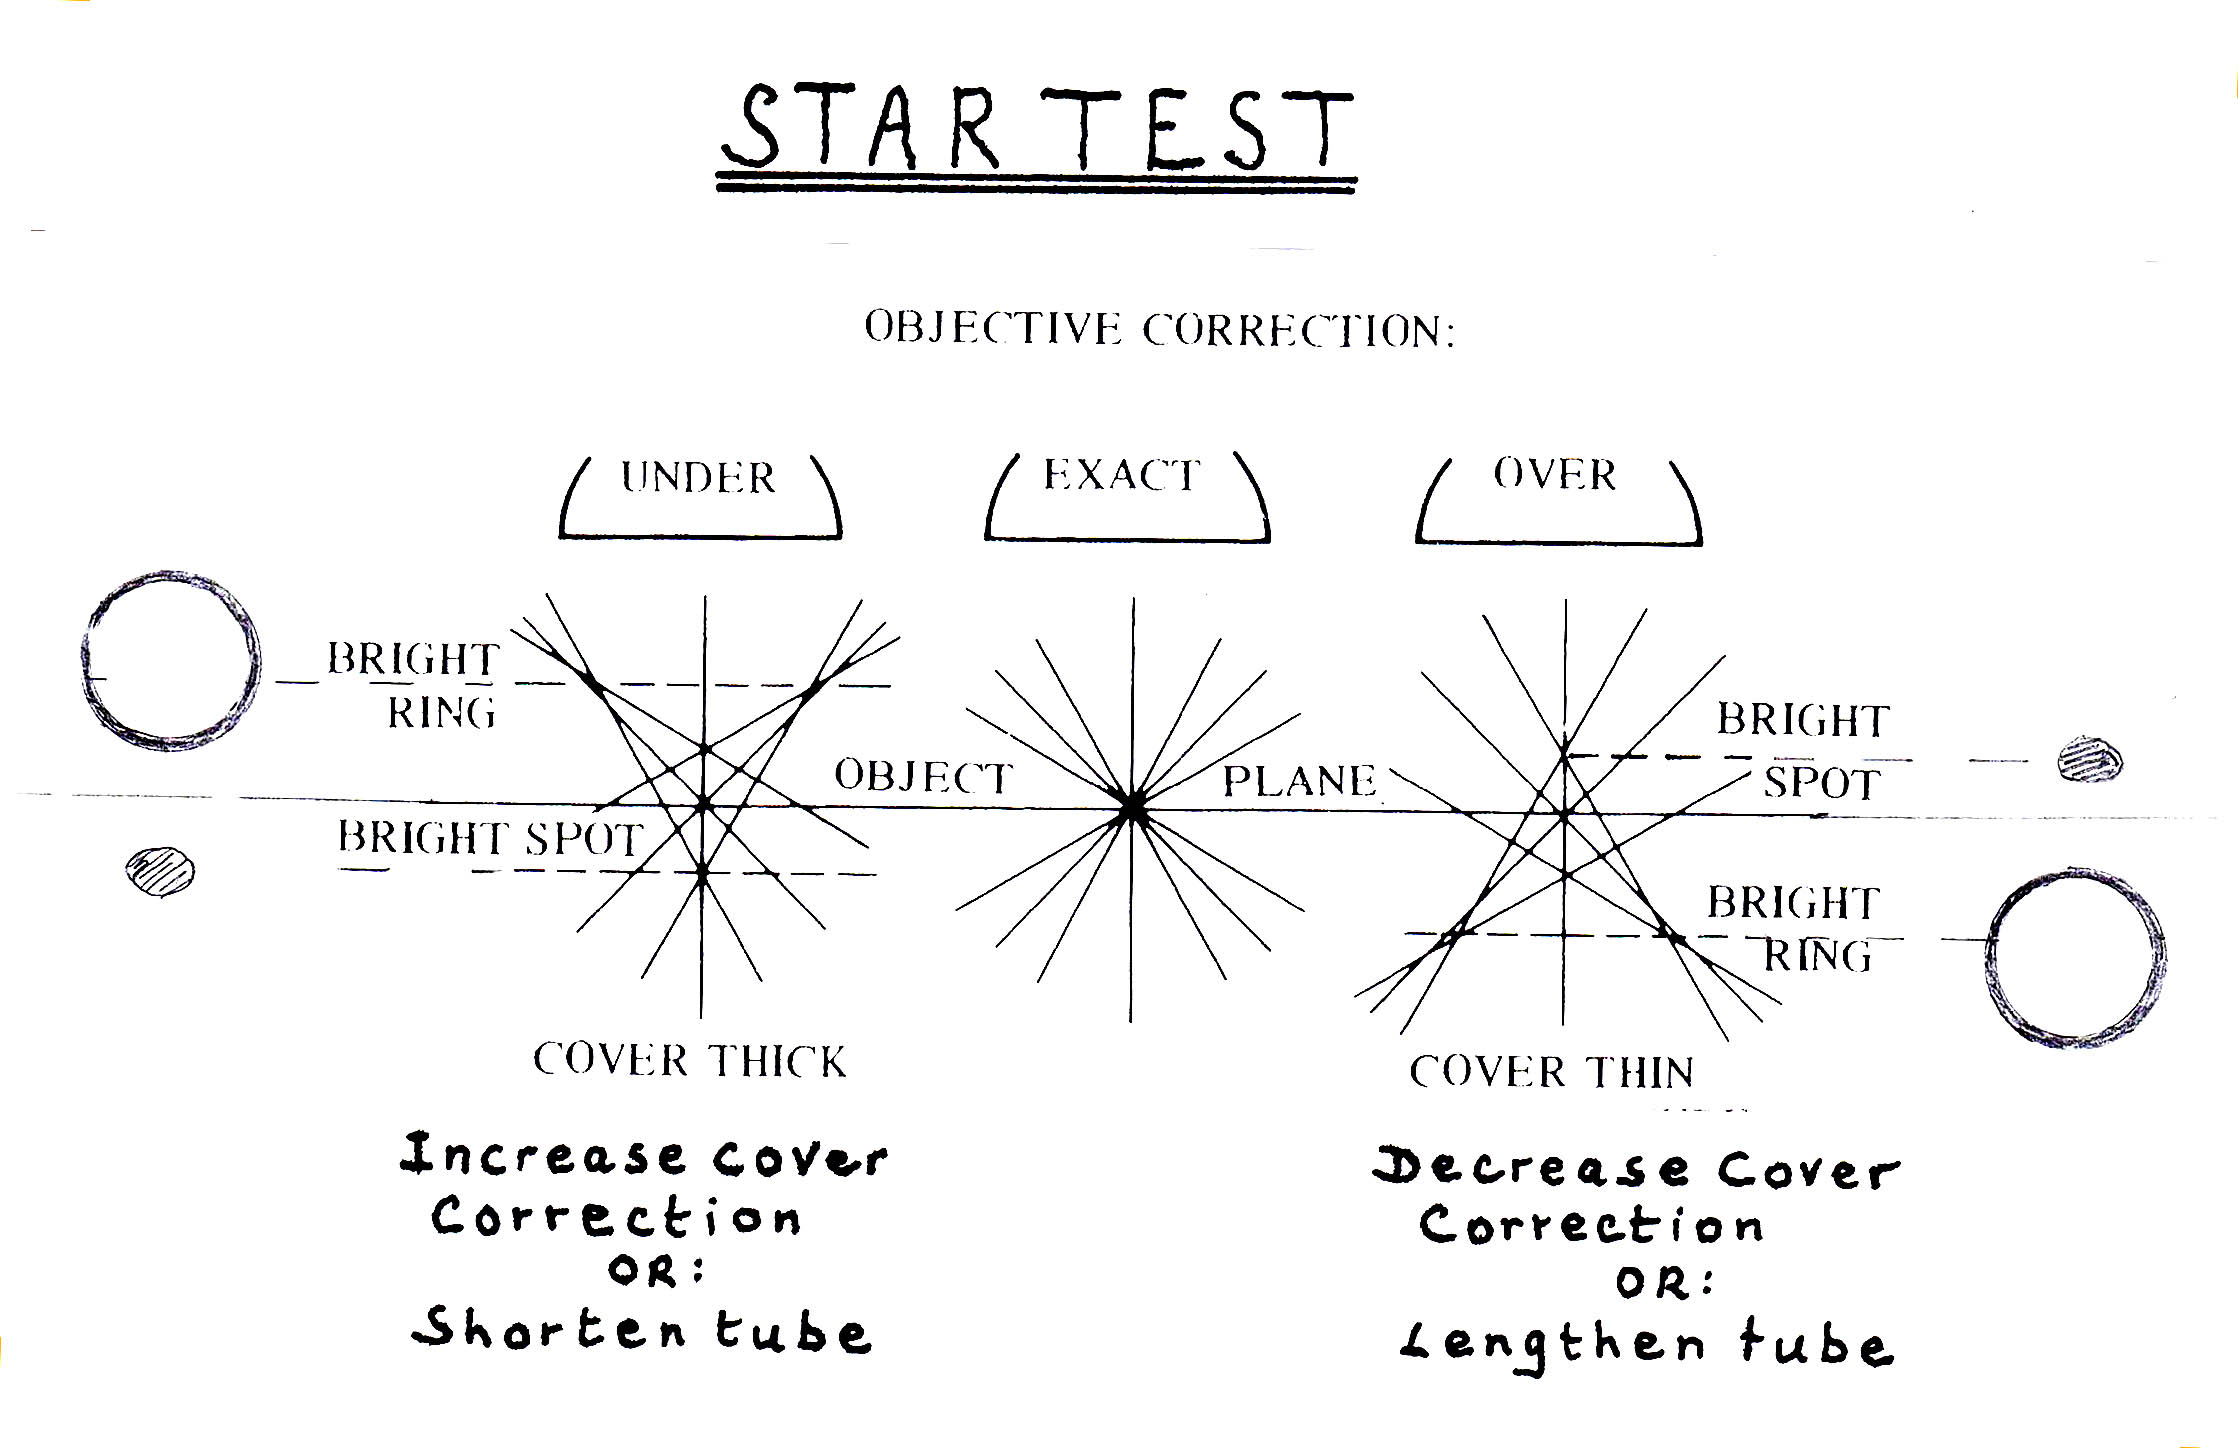 Star Test